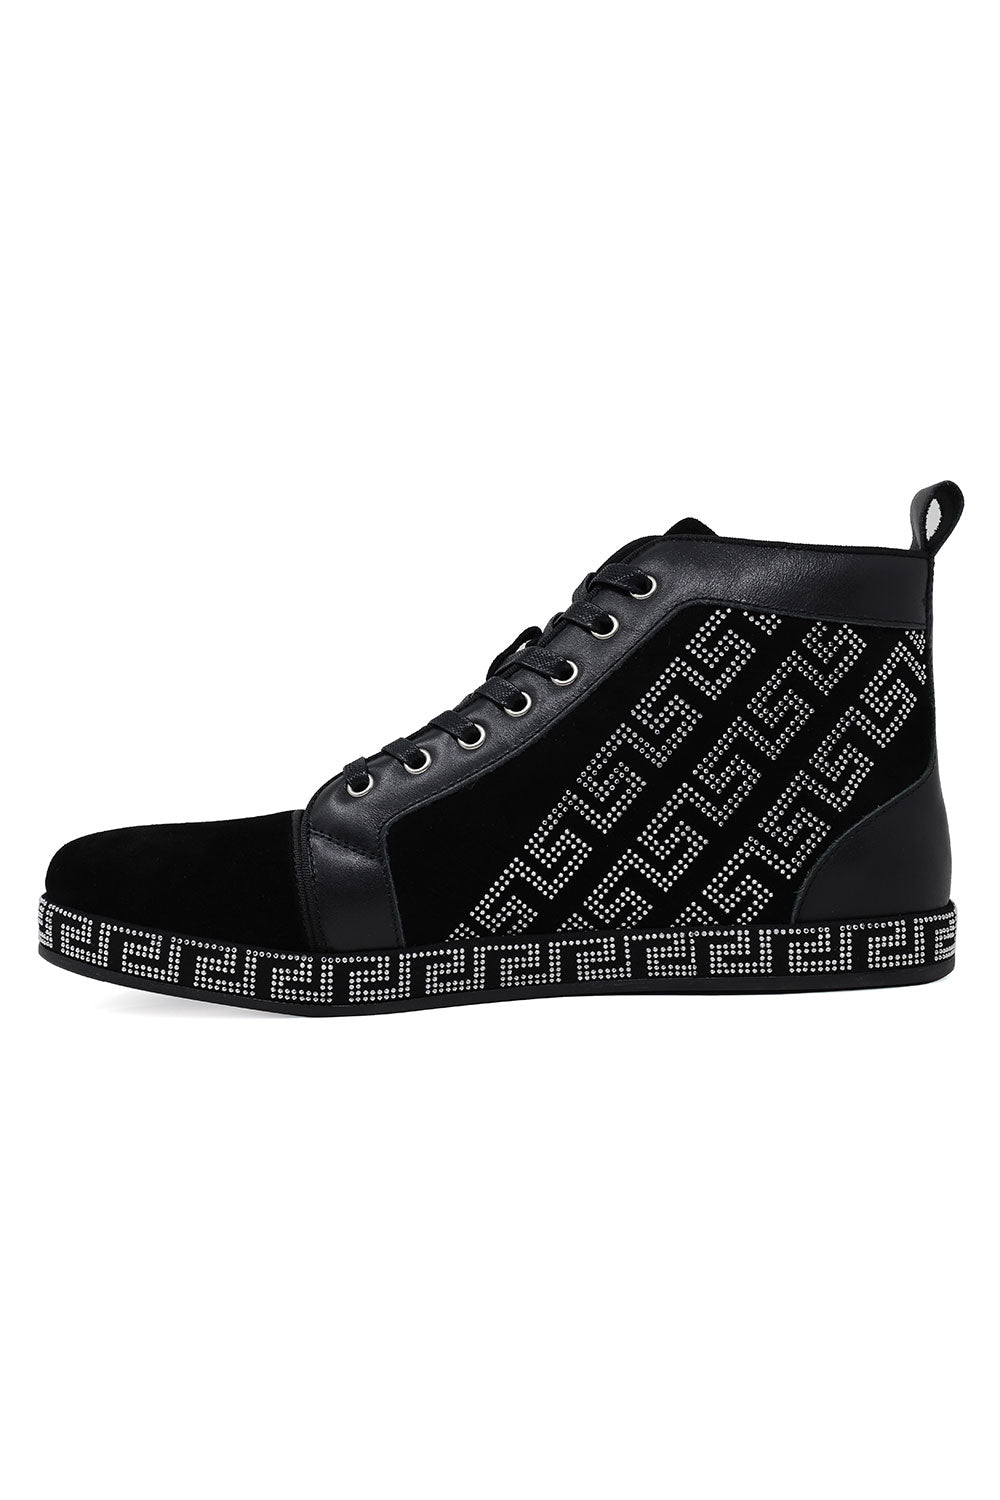 Barabas Men's Rhinestone Greek Pattern Design High Top Sneakers SH729 Black Silver